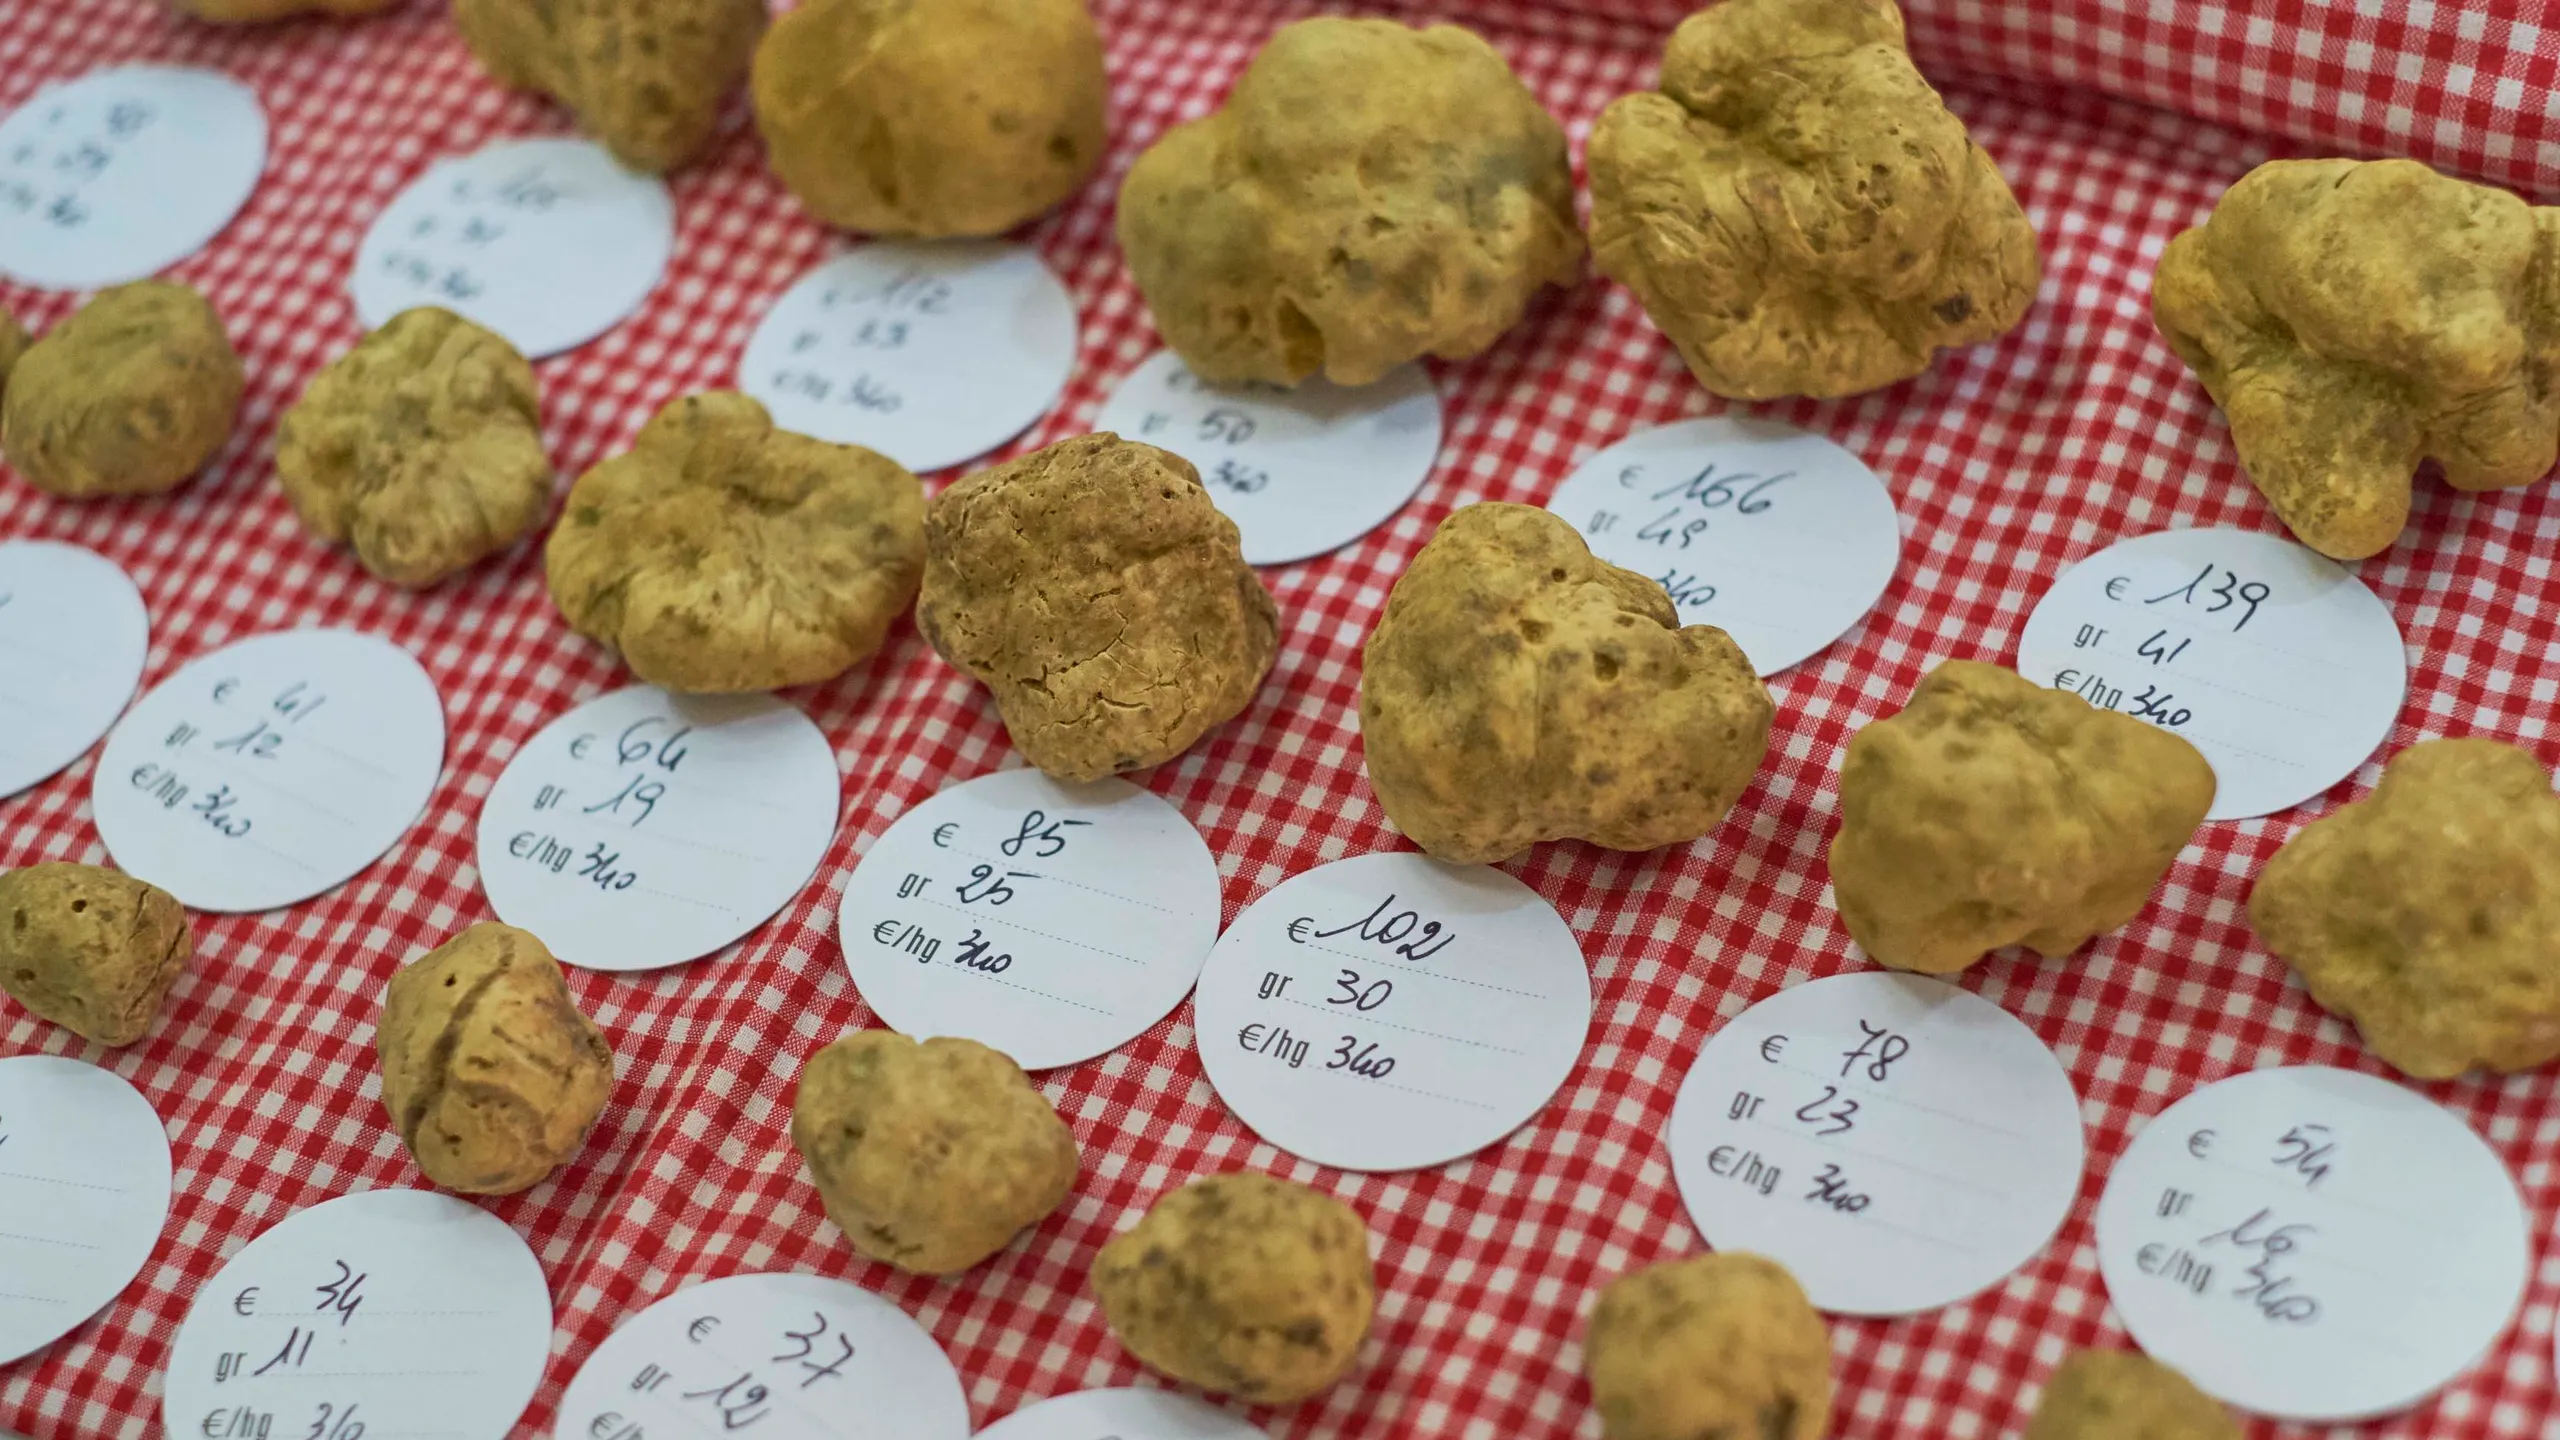 Why is Italian white Alba truffle expensive